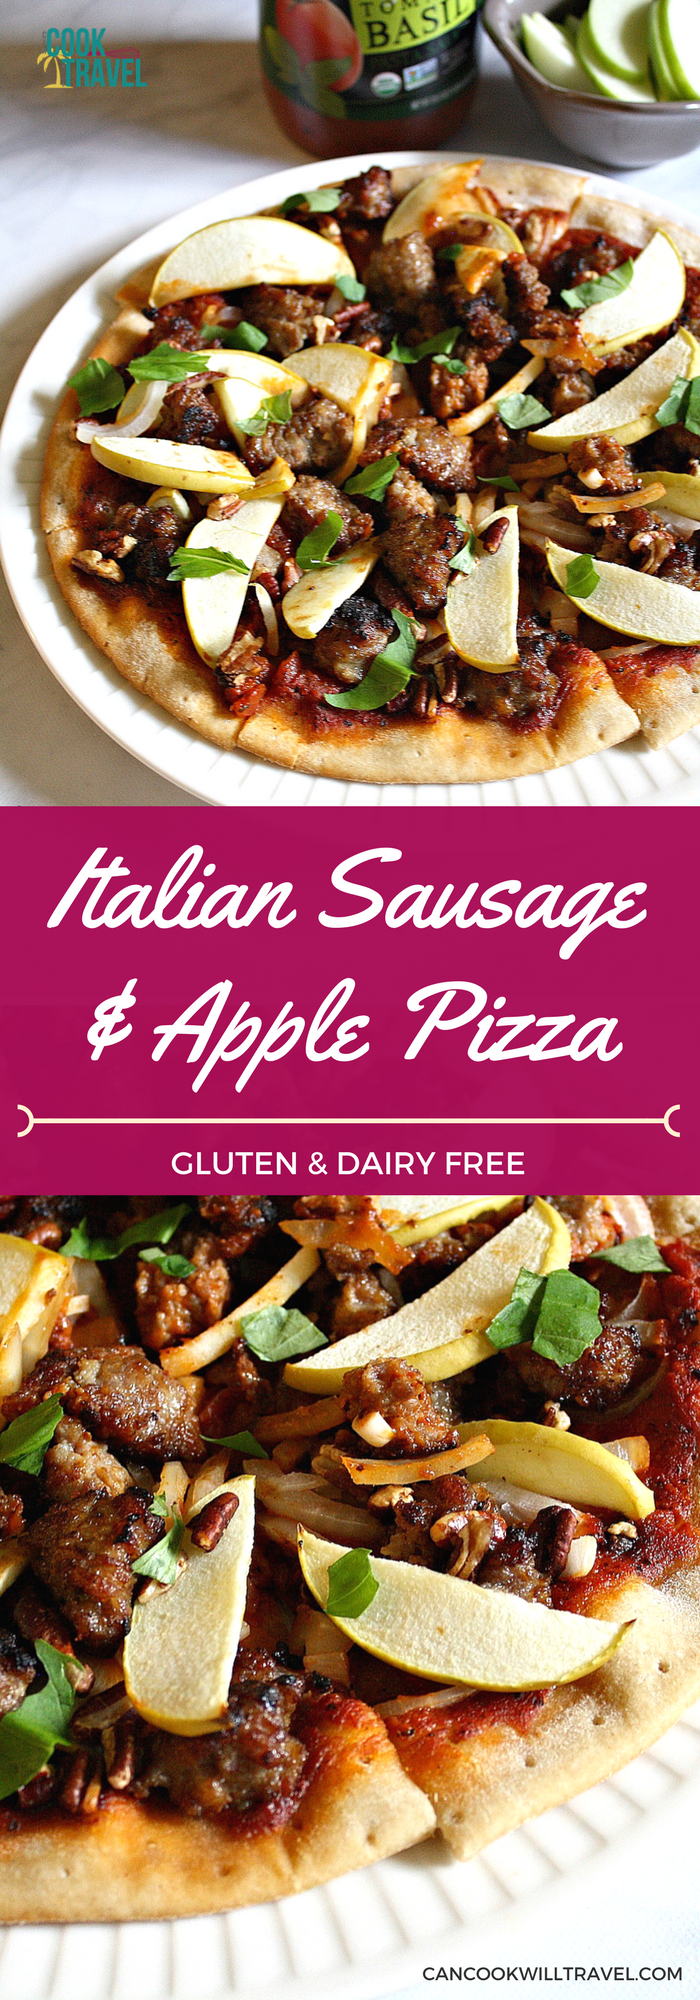 Italian Sausage & Apple Pizza_Collage1